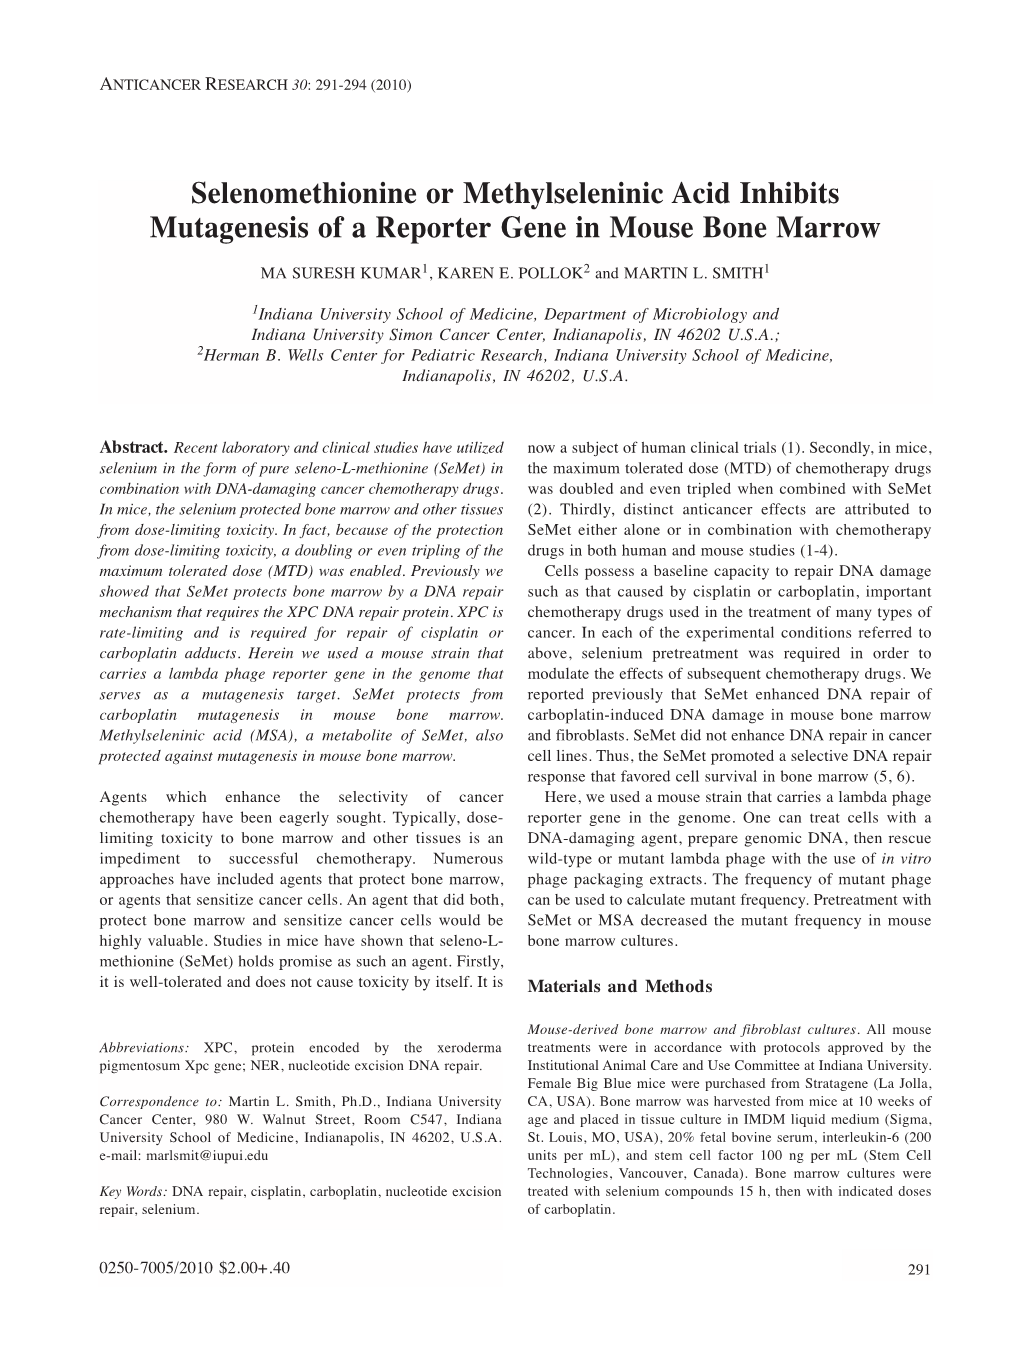 Selenomethionine Or Methylseleninic Acid Inhibits Mutagenesis of a Reporter Gene in Mouse Bone Marrow